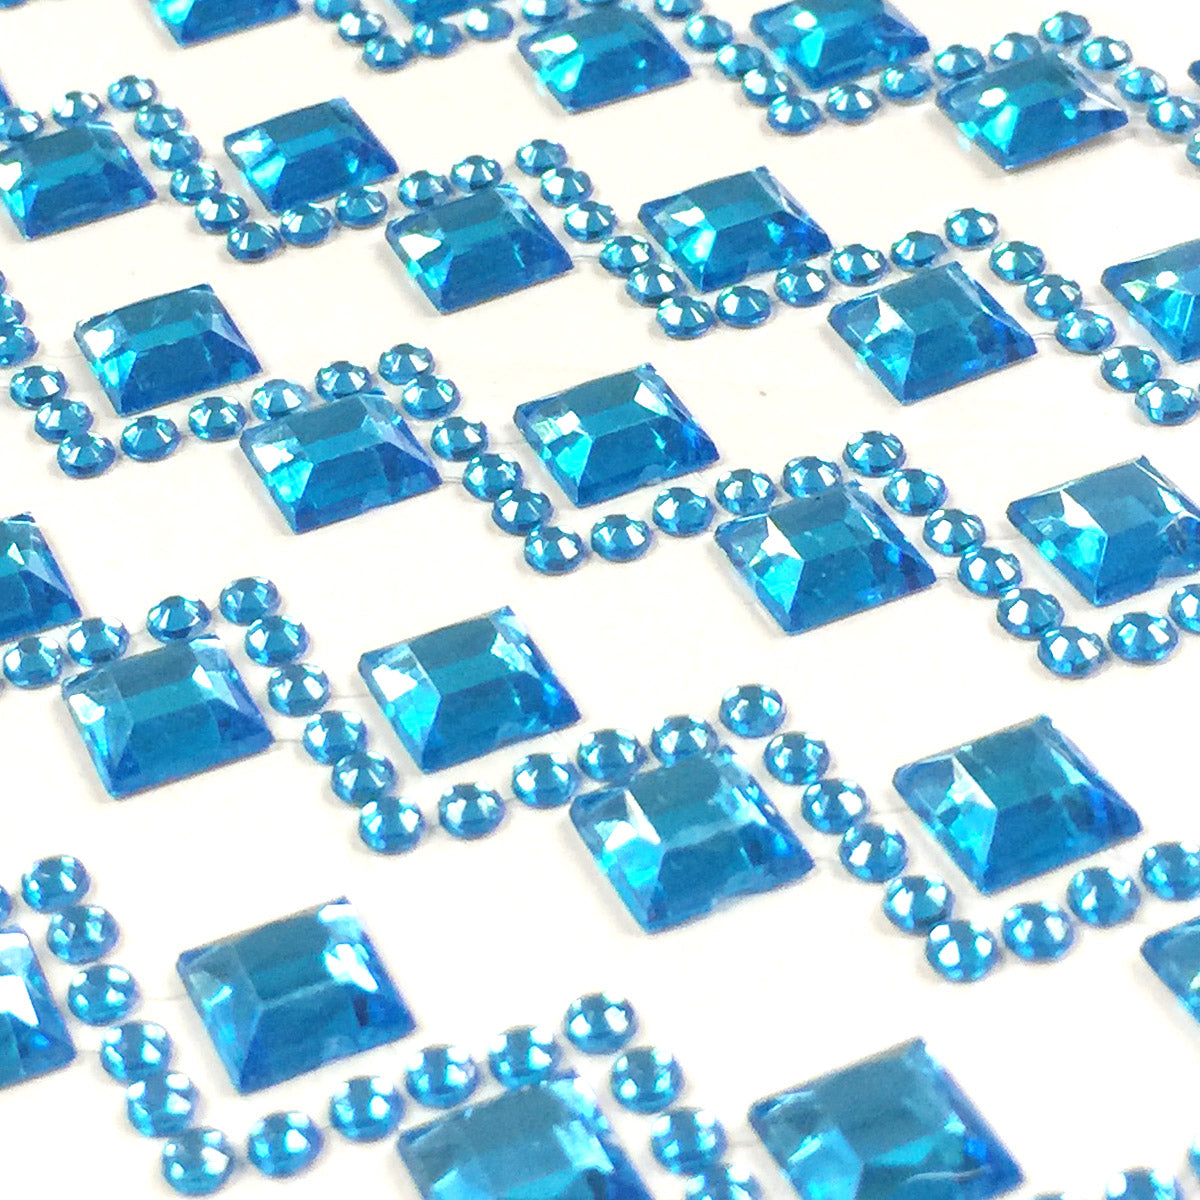 Wrapables Diamond and Round Acrylic Self Adhesive Crystal Gem Stickers